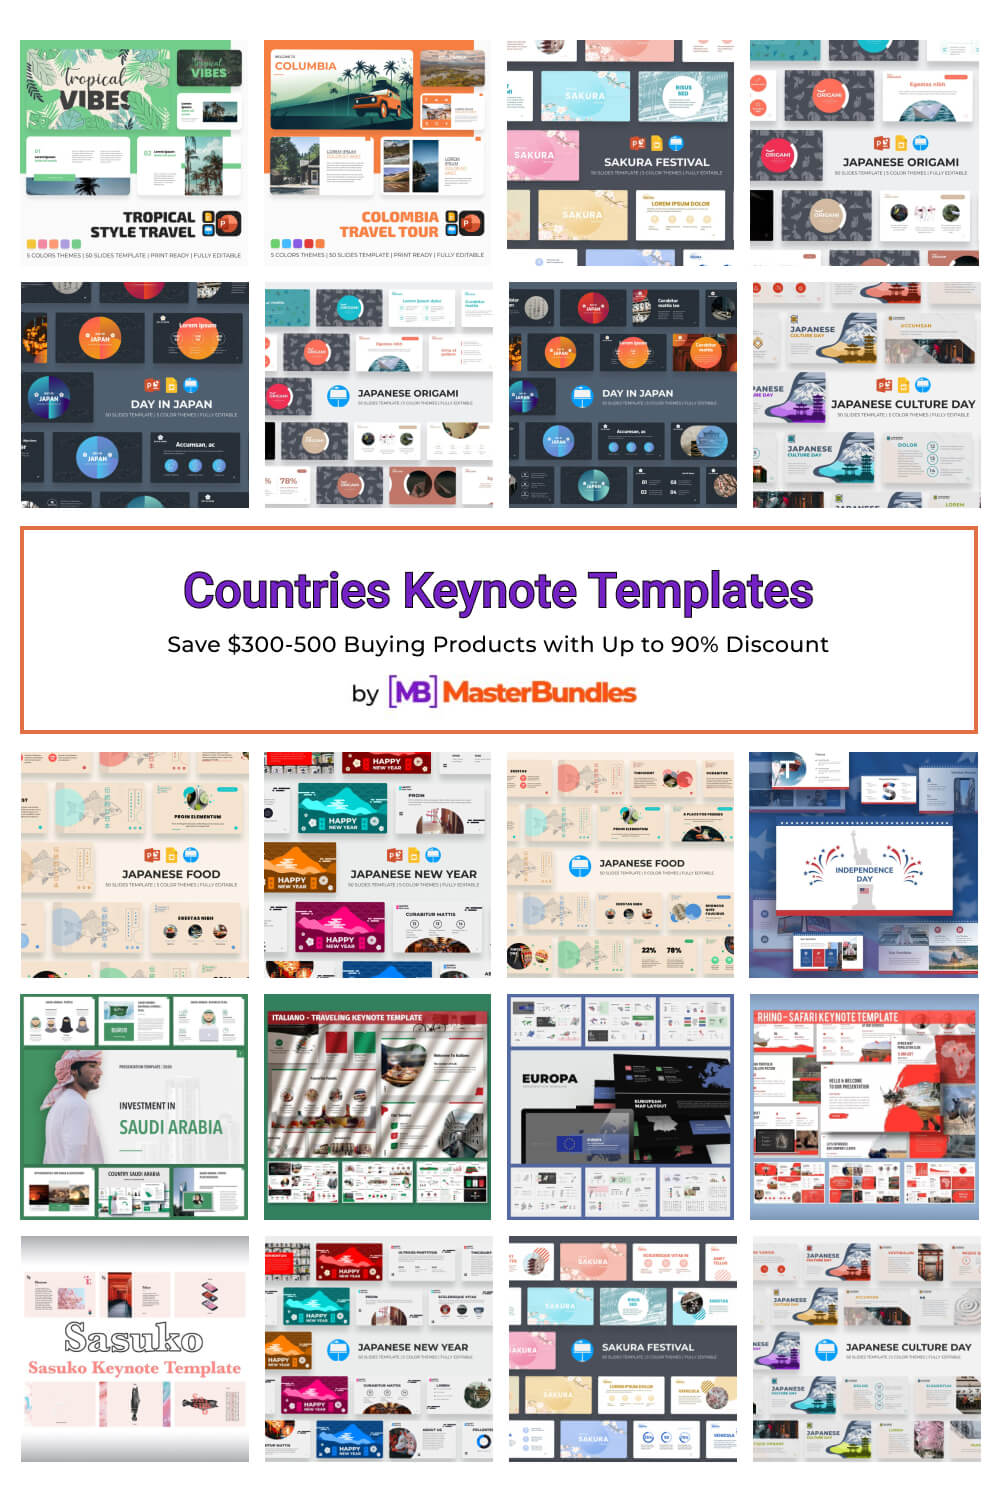 countries keynote templates pinterest image.